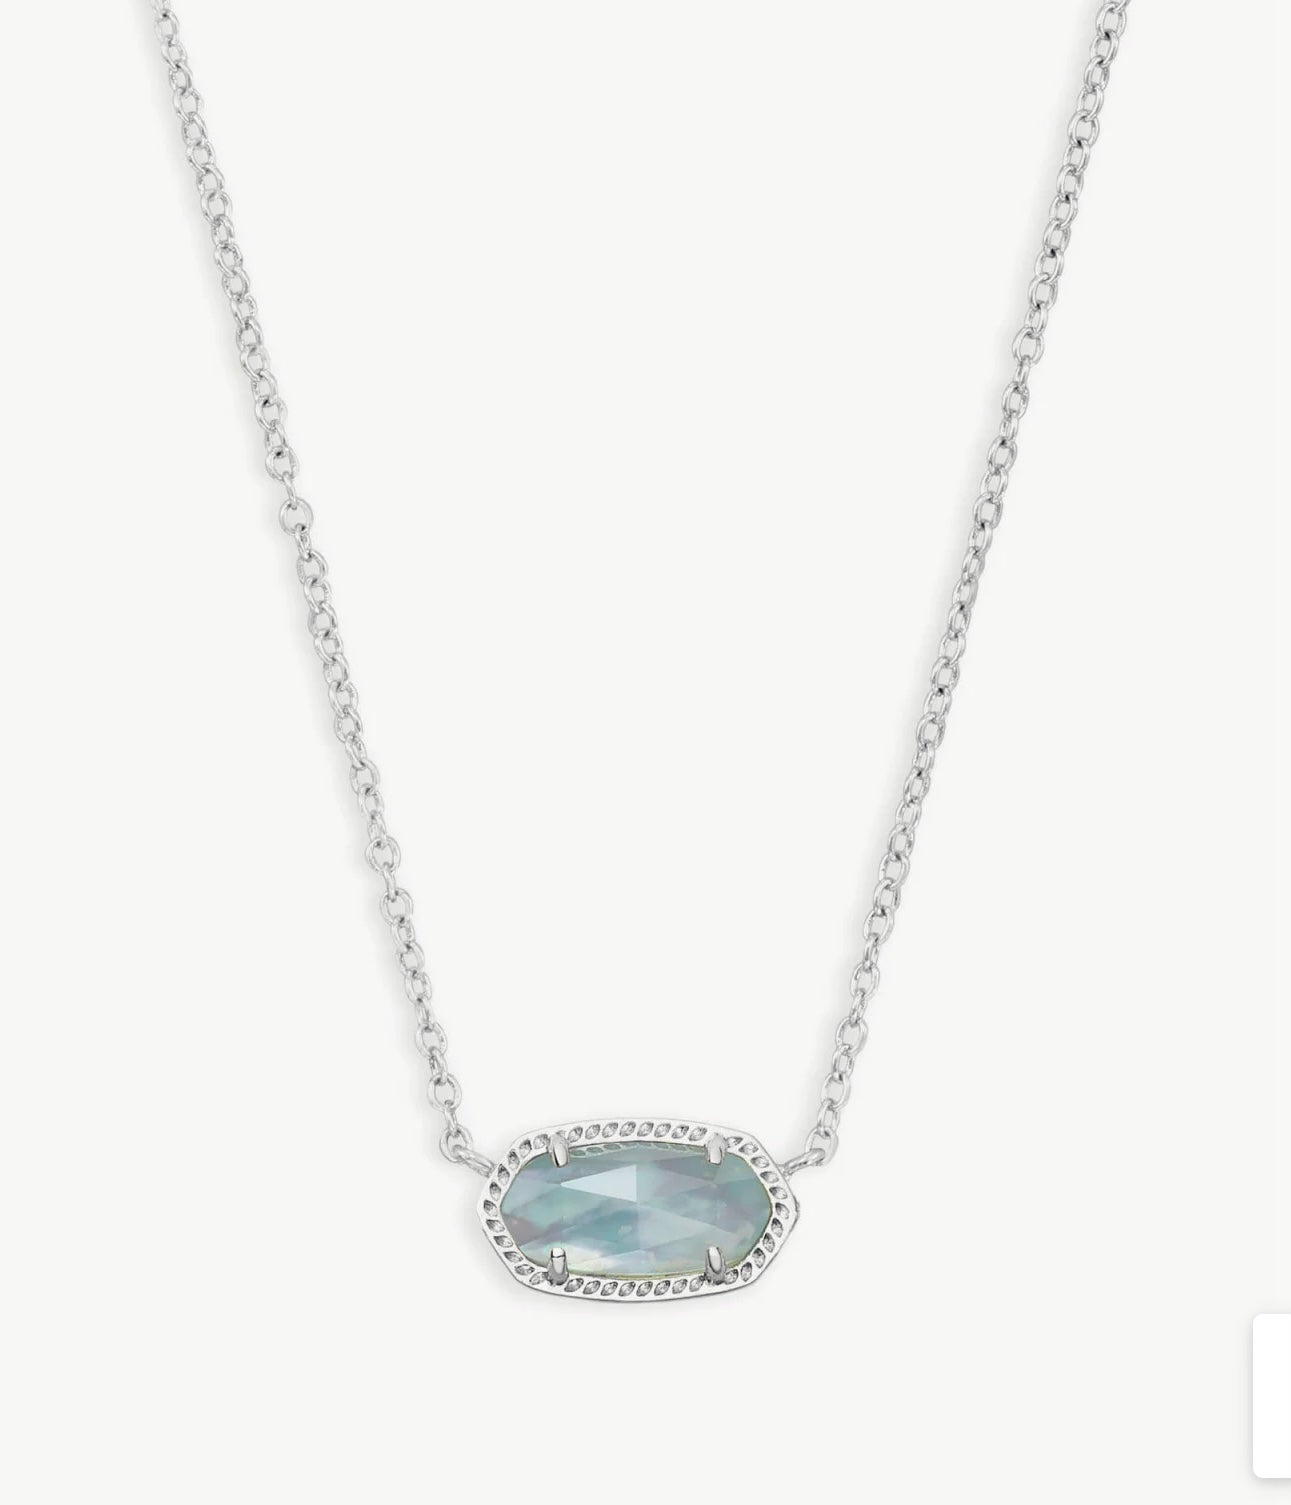 Kendra Scott Elisa Silver Necklace in Light Blue Illusion